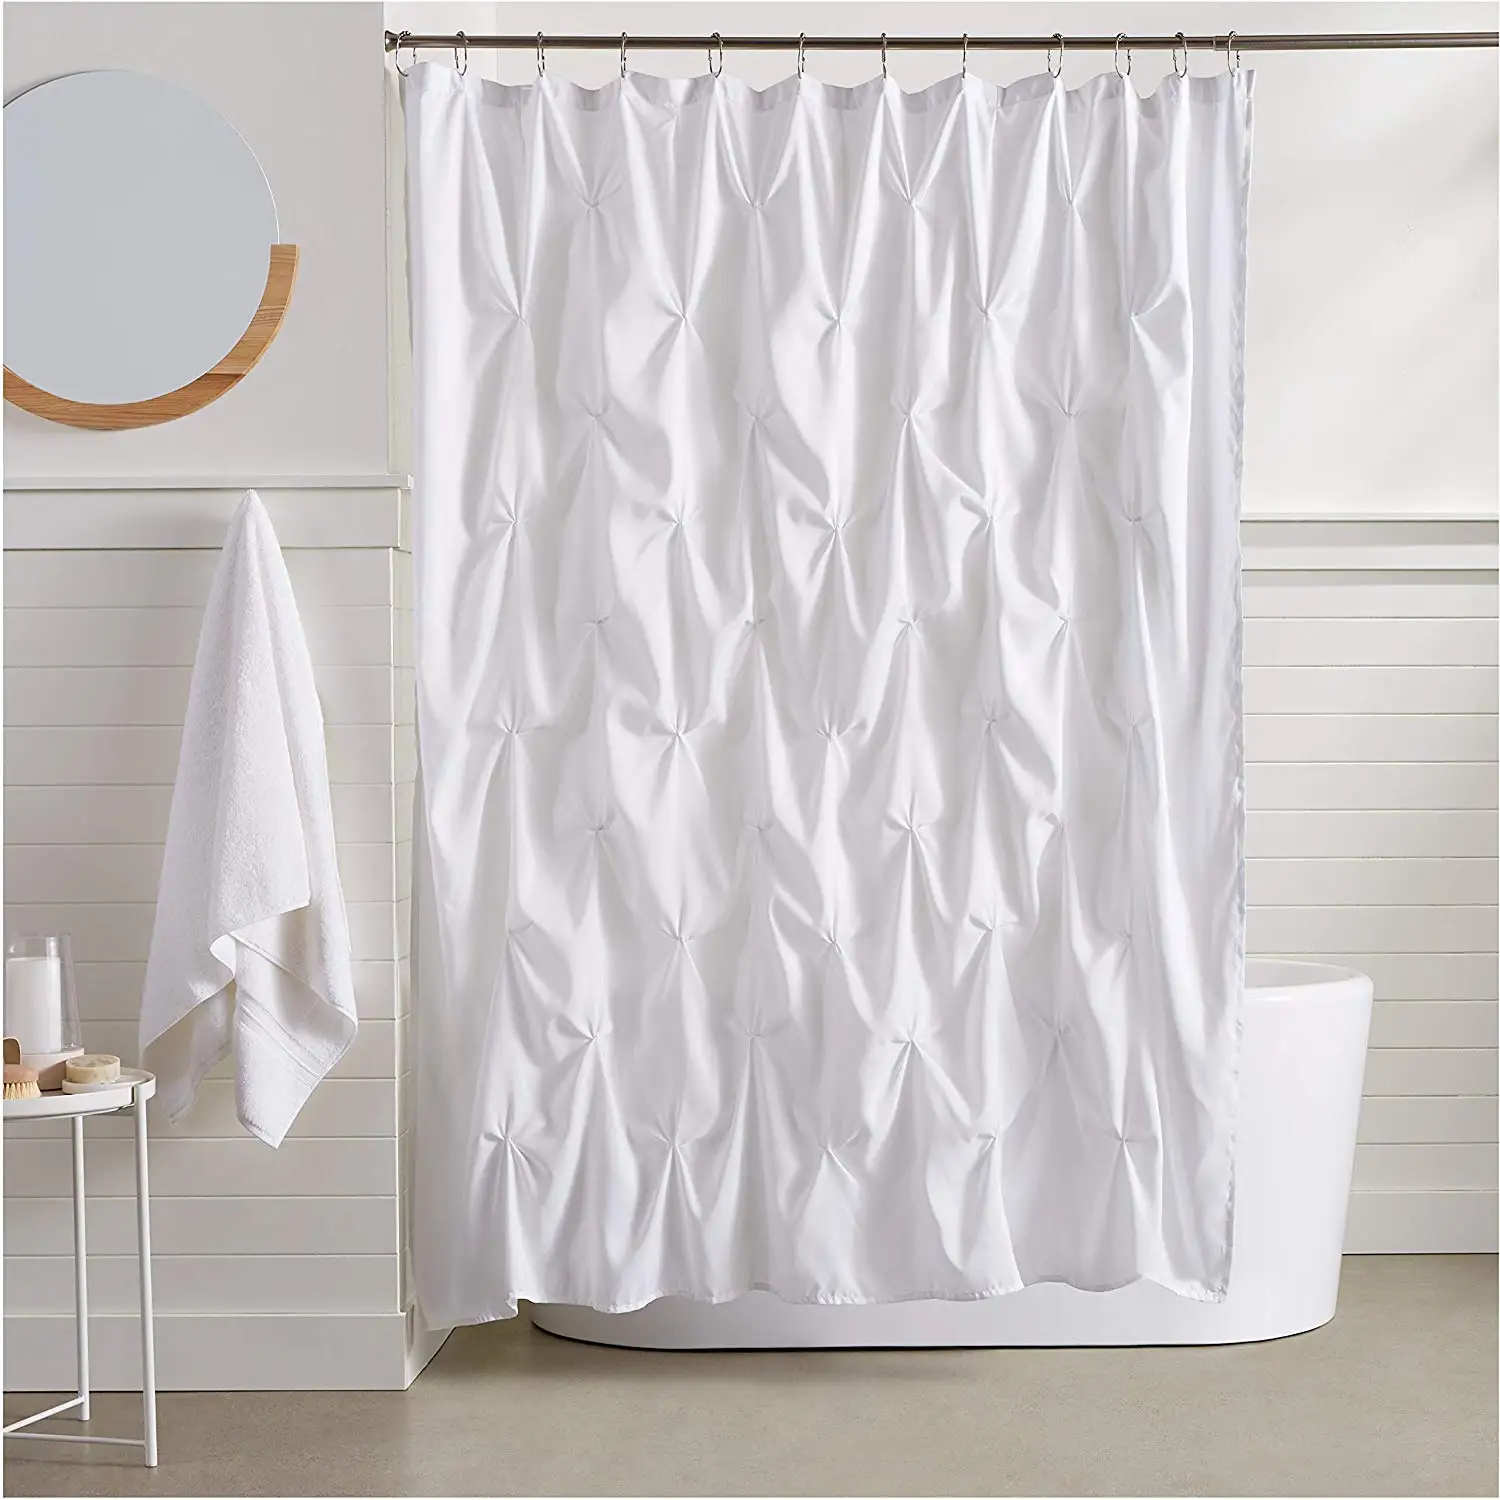 Shower curtain7.jpg